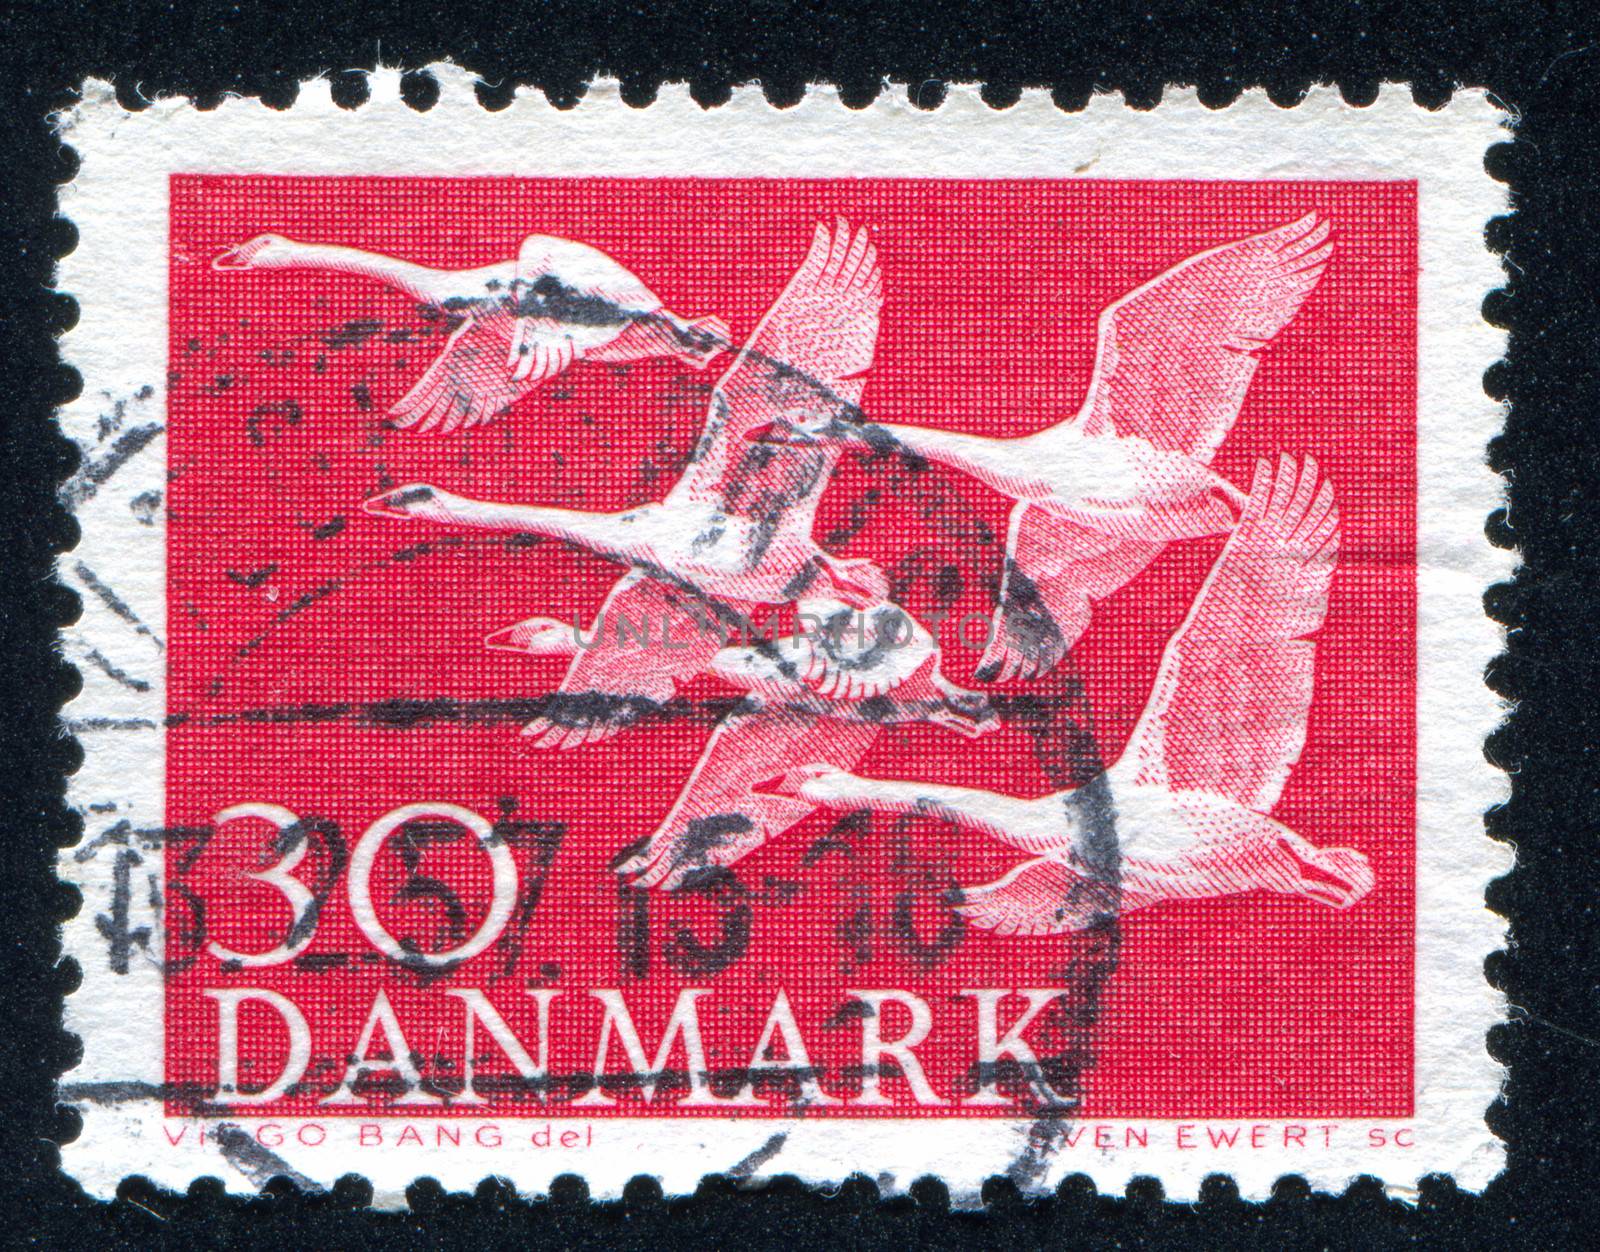 DENMARK - CIRCA 1956: stamp printed by Denmark, shows Whooper Swans, circa 1956